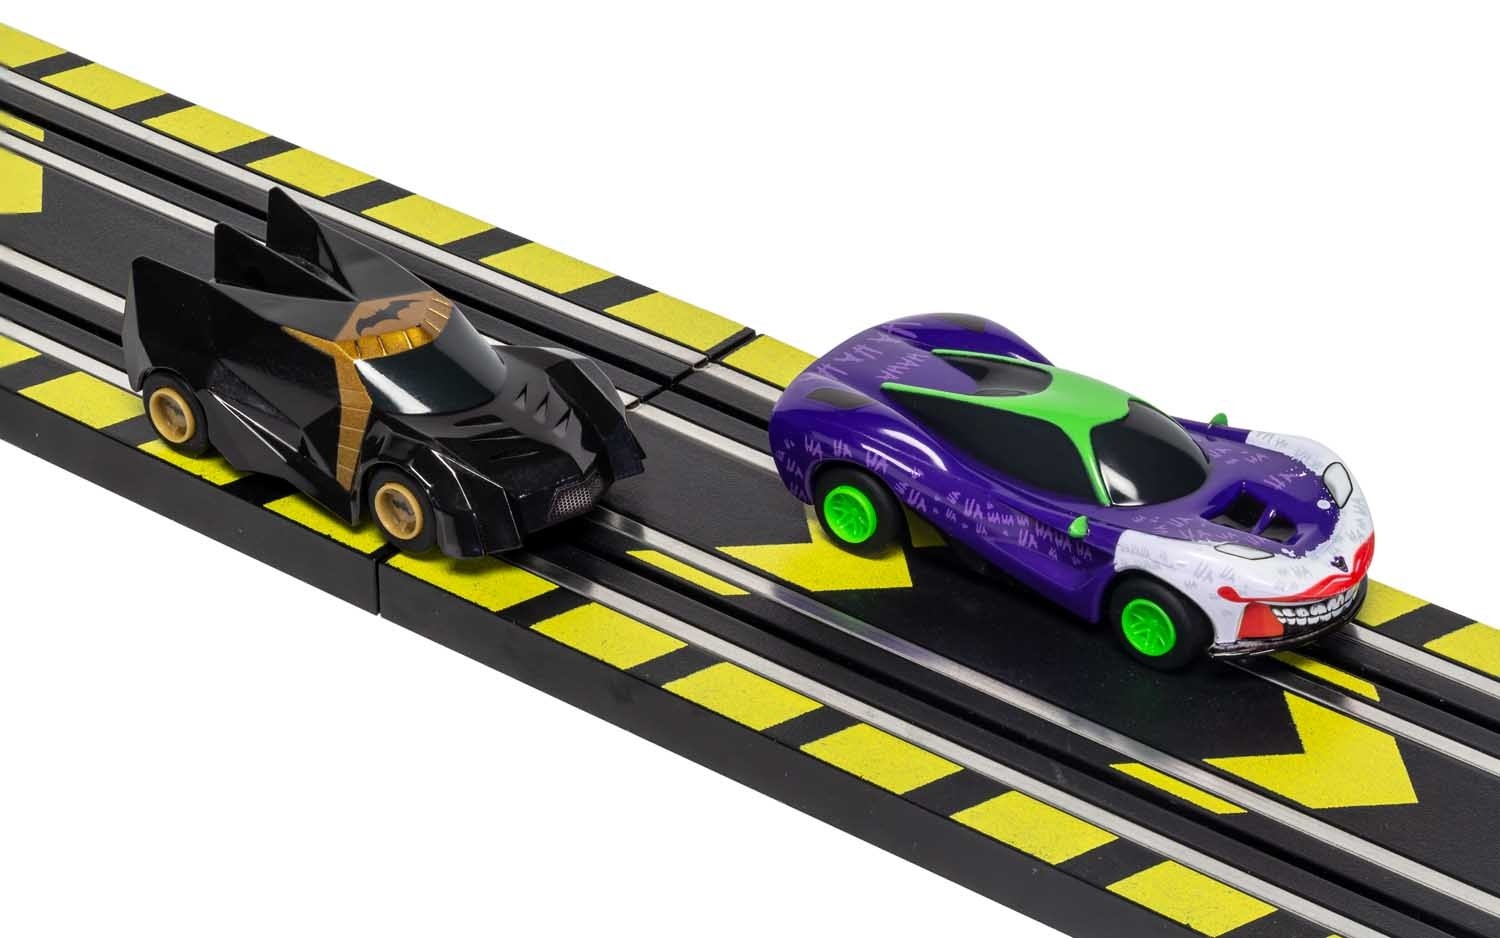 Micro Scalextric Batman vs Joker Set Battery Powered Race Set # 1155M